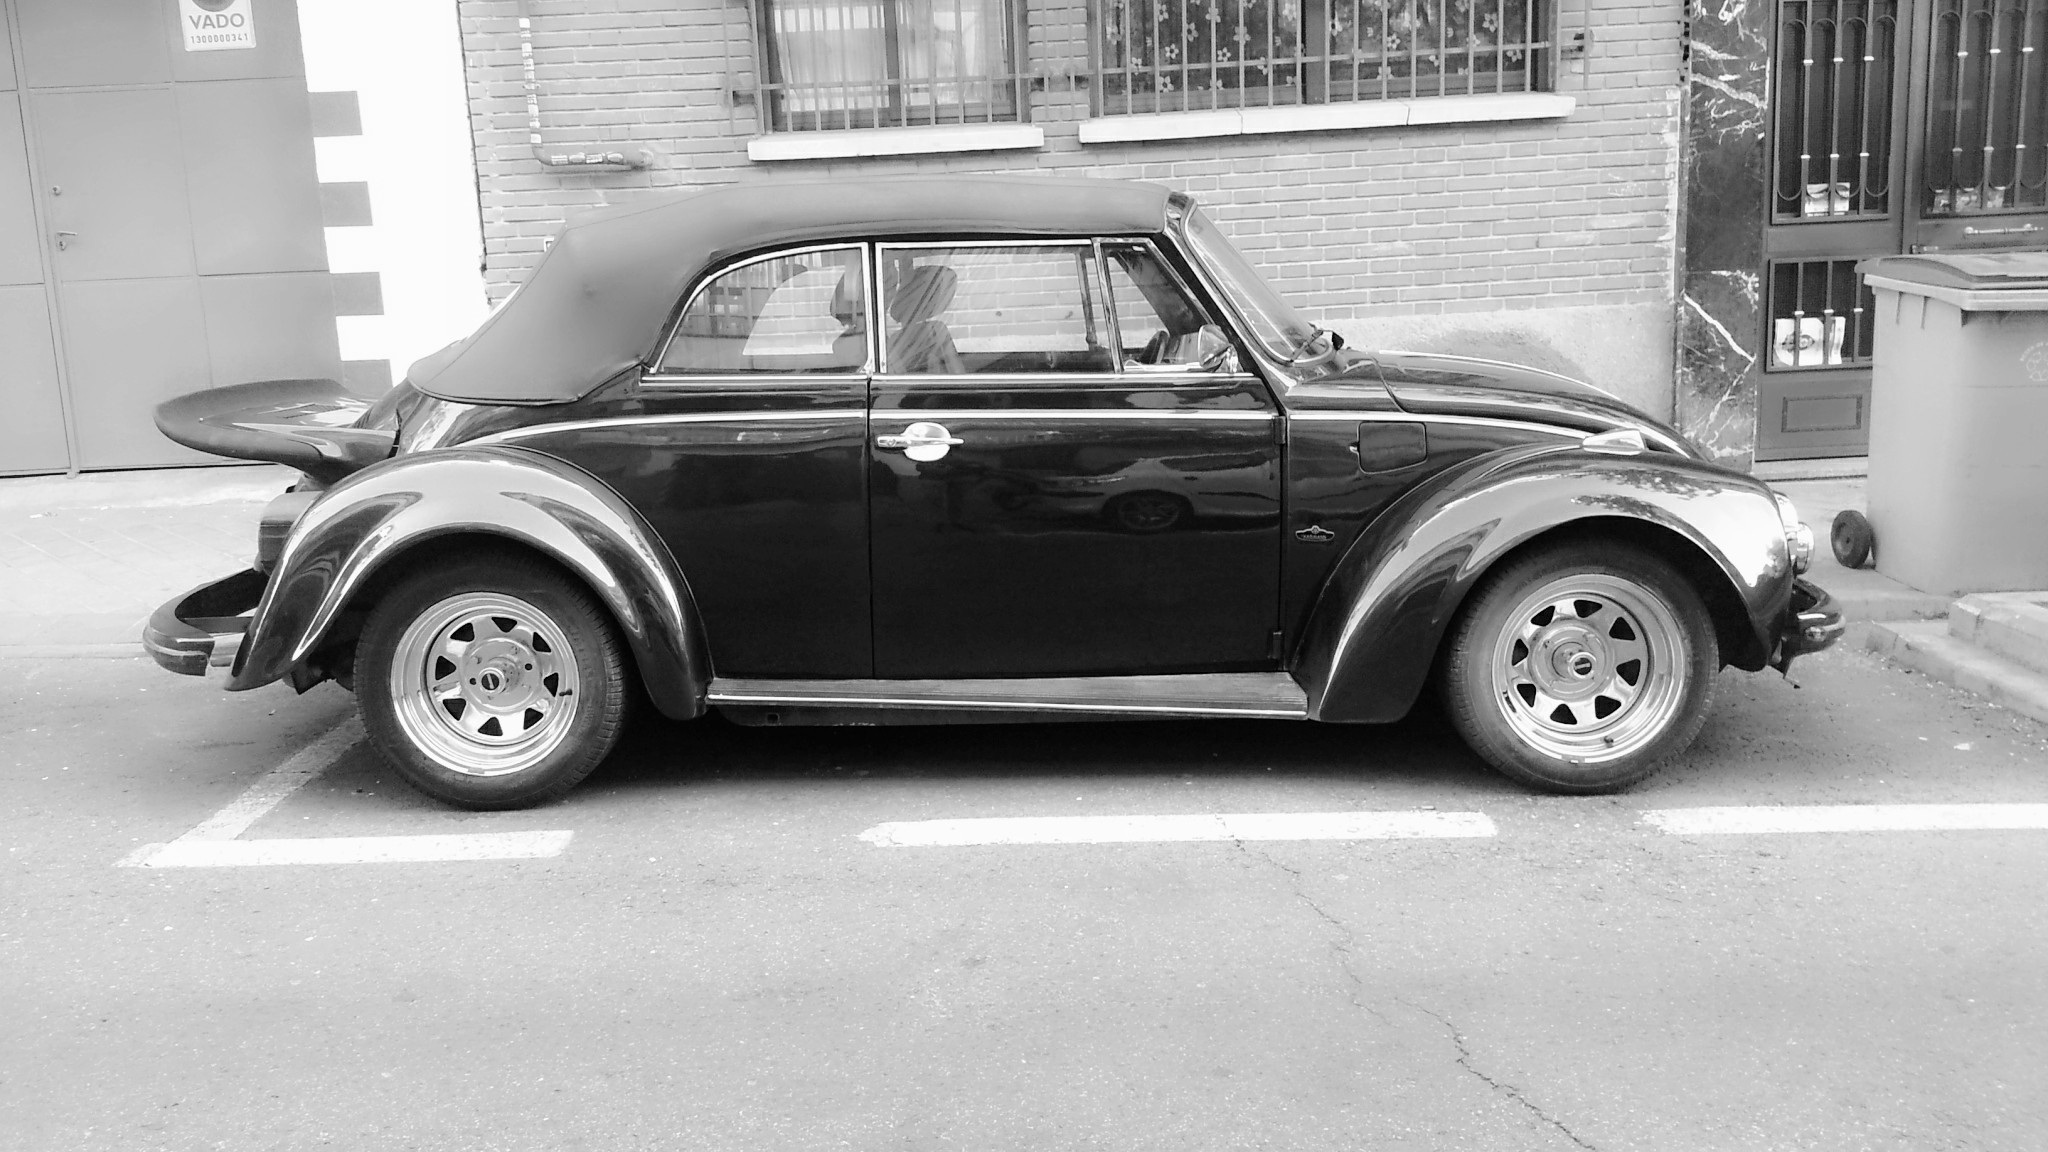 Free Images : black and white, wheel, motor vehicle, vintage car ...